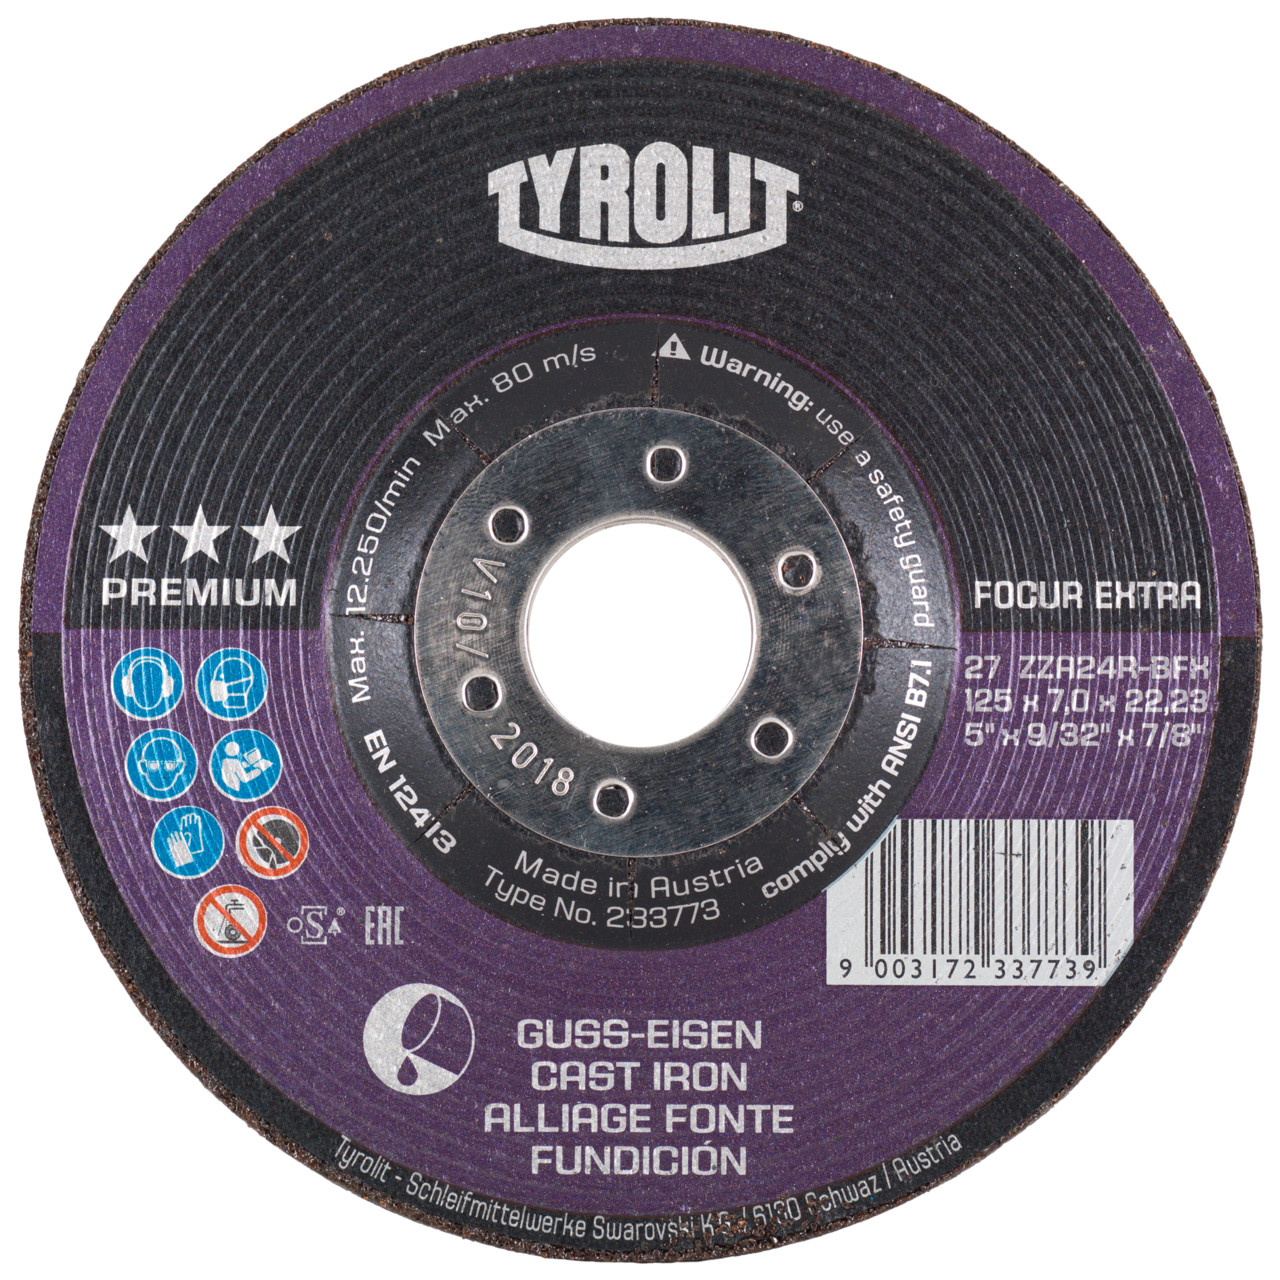 Tyrolit Roughing disc DxUxH 178x4x22.23 FOCUR Extra for cast iron, shape: 27 - offset version, Art. 233774